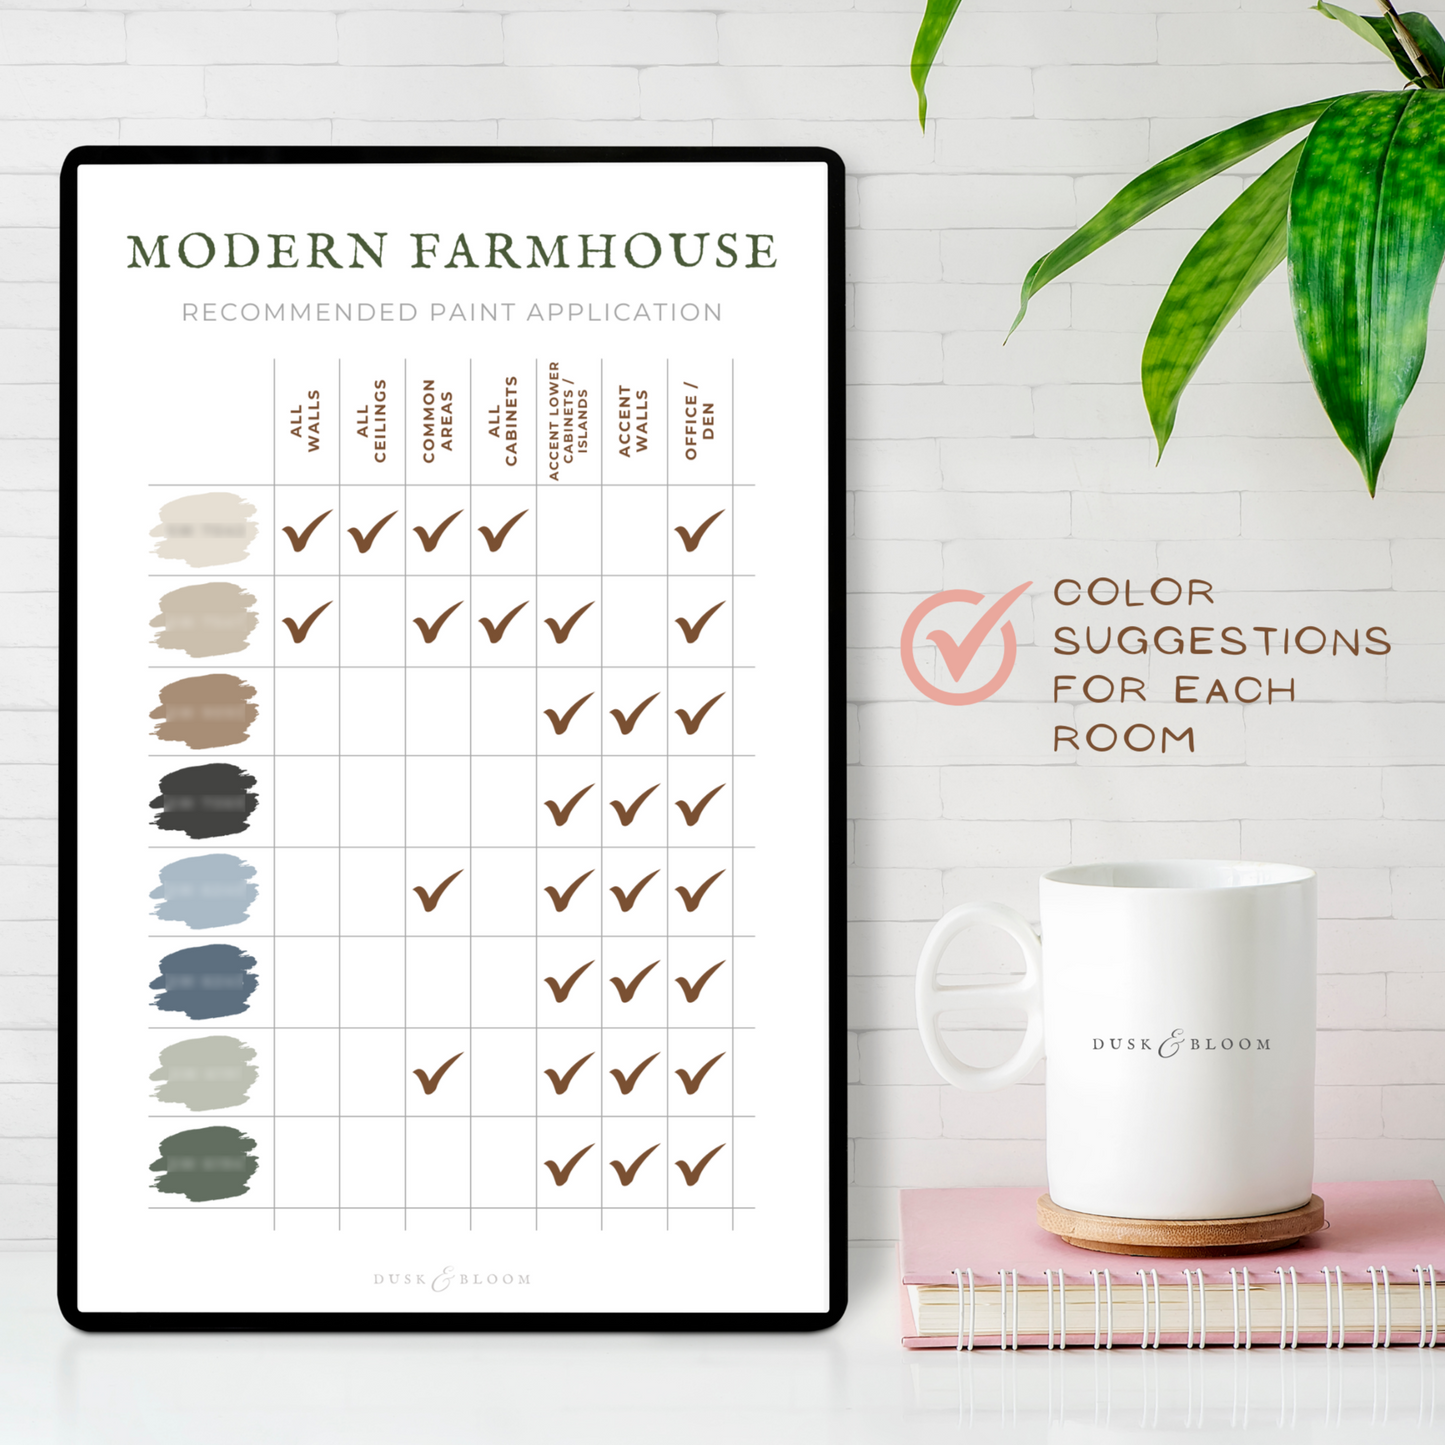 Modern Farmhouse Color Palette - Paint Color Palette for Whole House Interior + Materials & Finishes | Dusk & Bloom